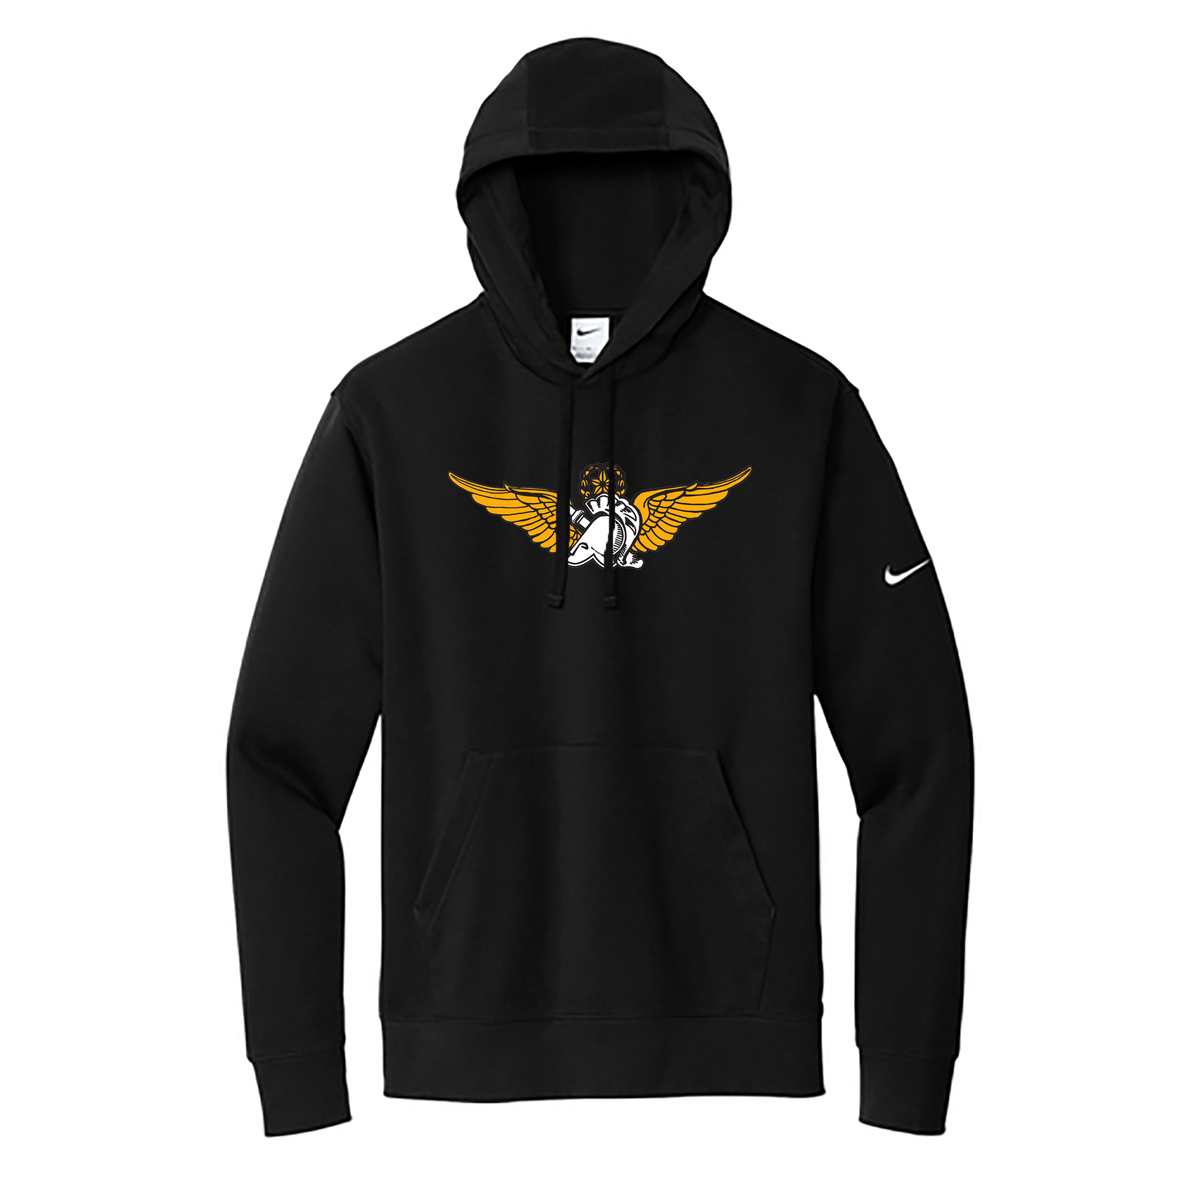 West Point Flight Team Nike Fleece Swoosh Hoodie